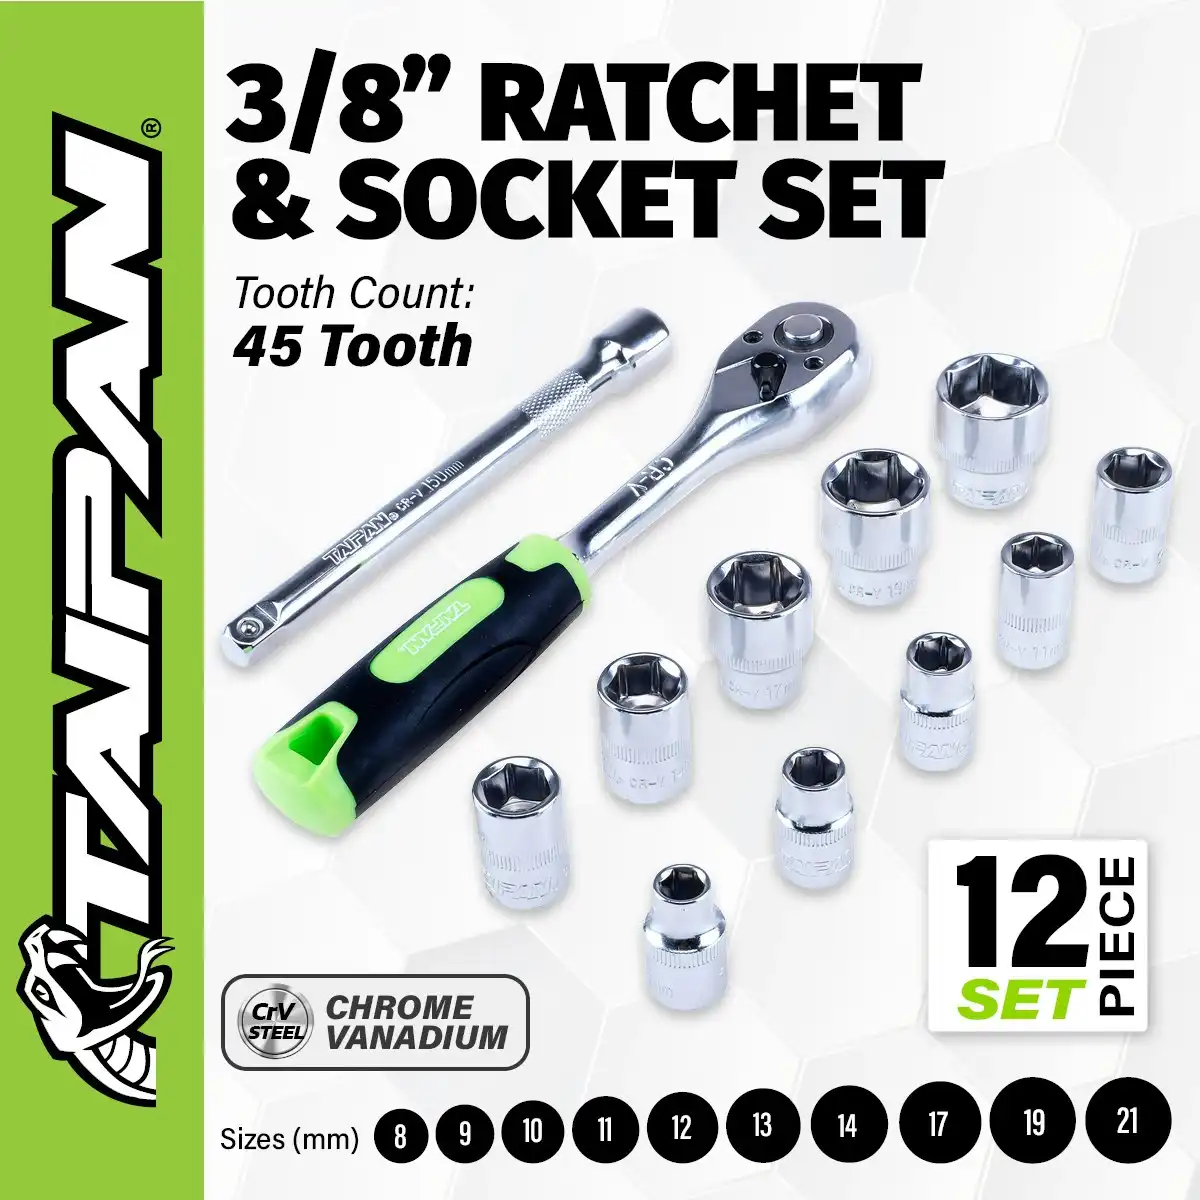 Taipan 12PCE 3/8" Ratchet Socket Set Premium Quality Chrome Vanadium Steel